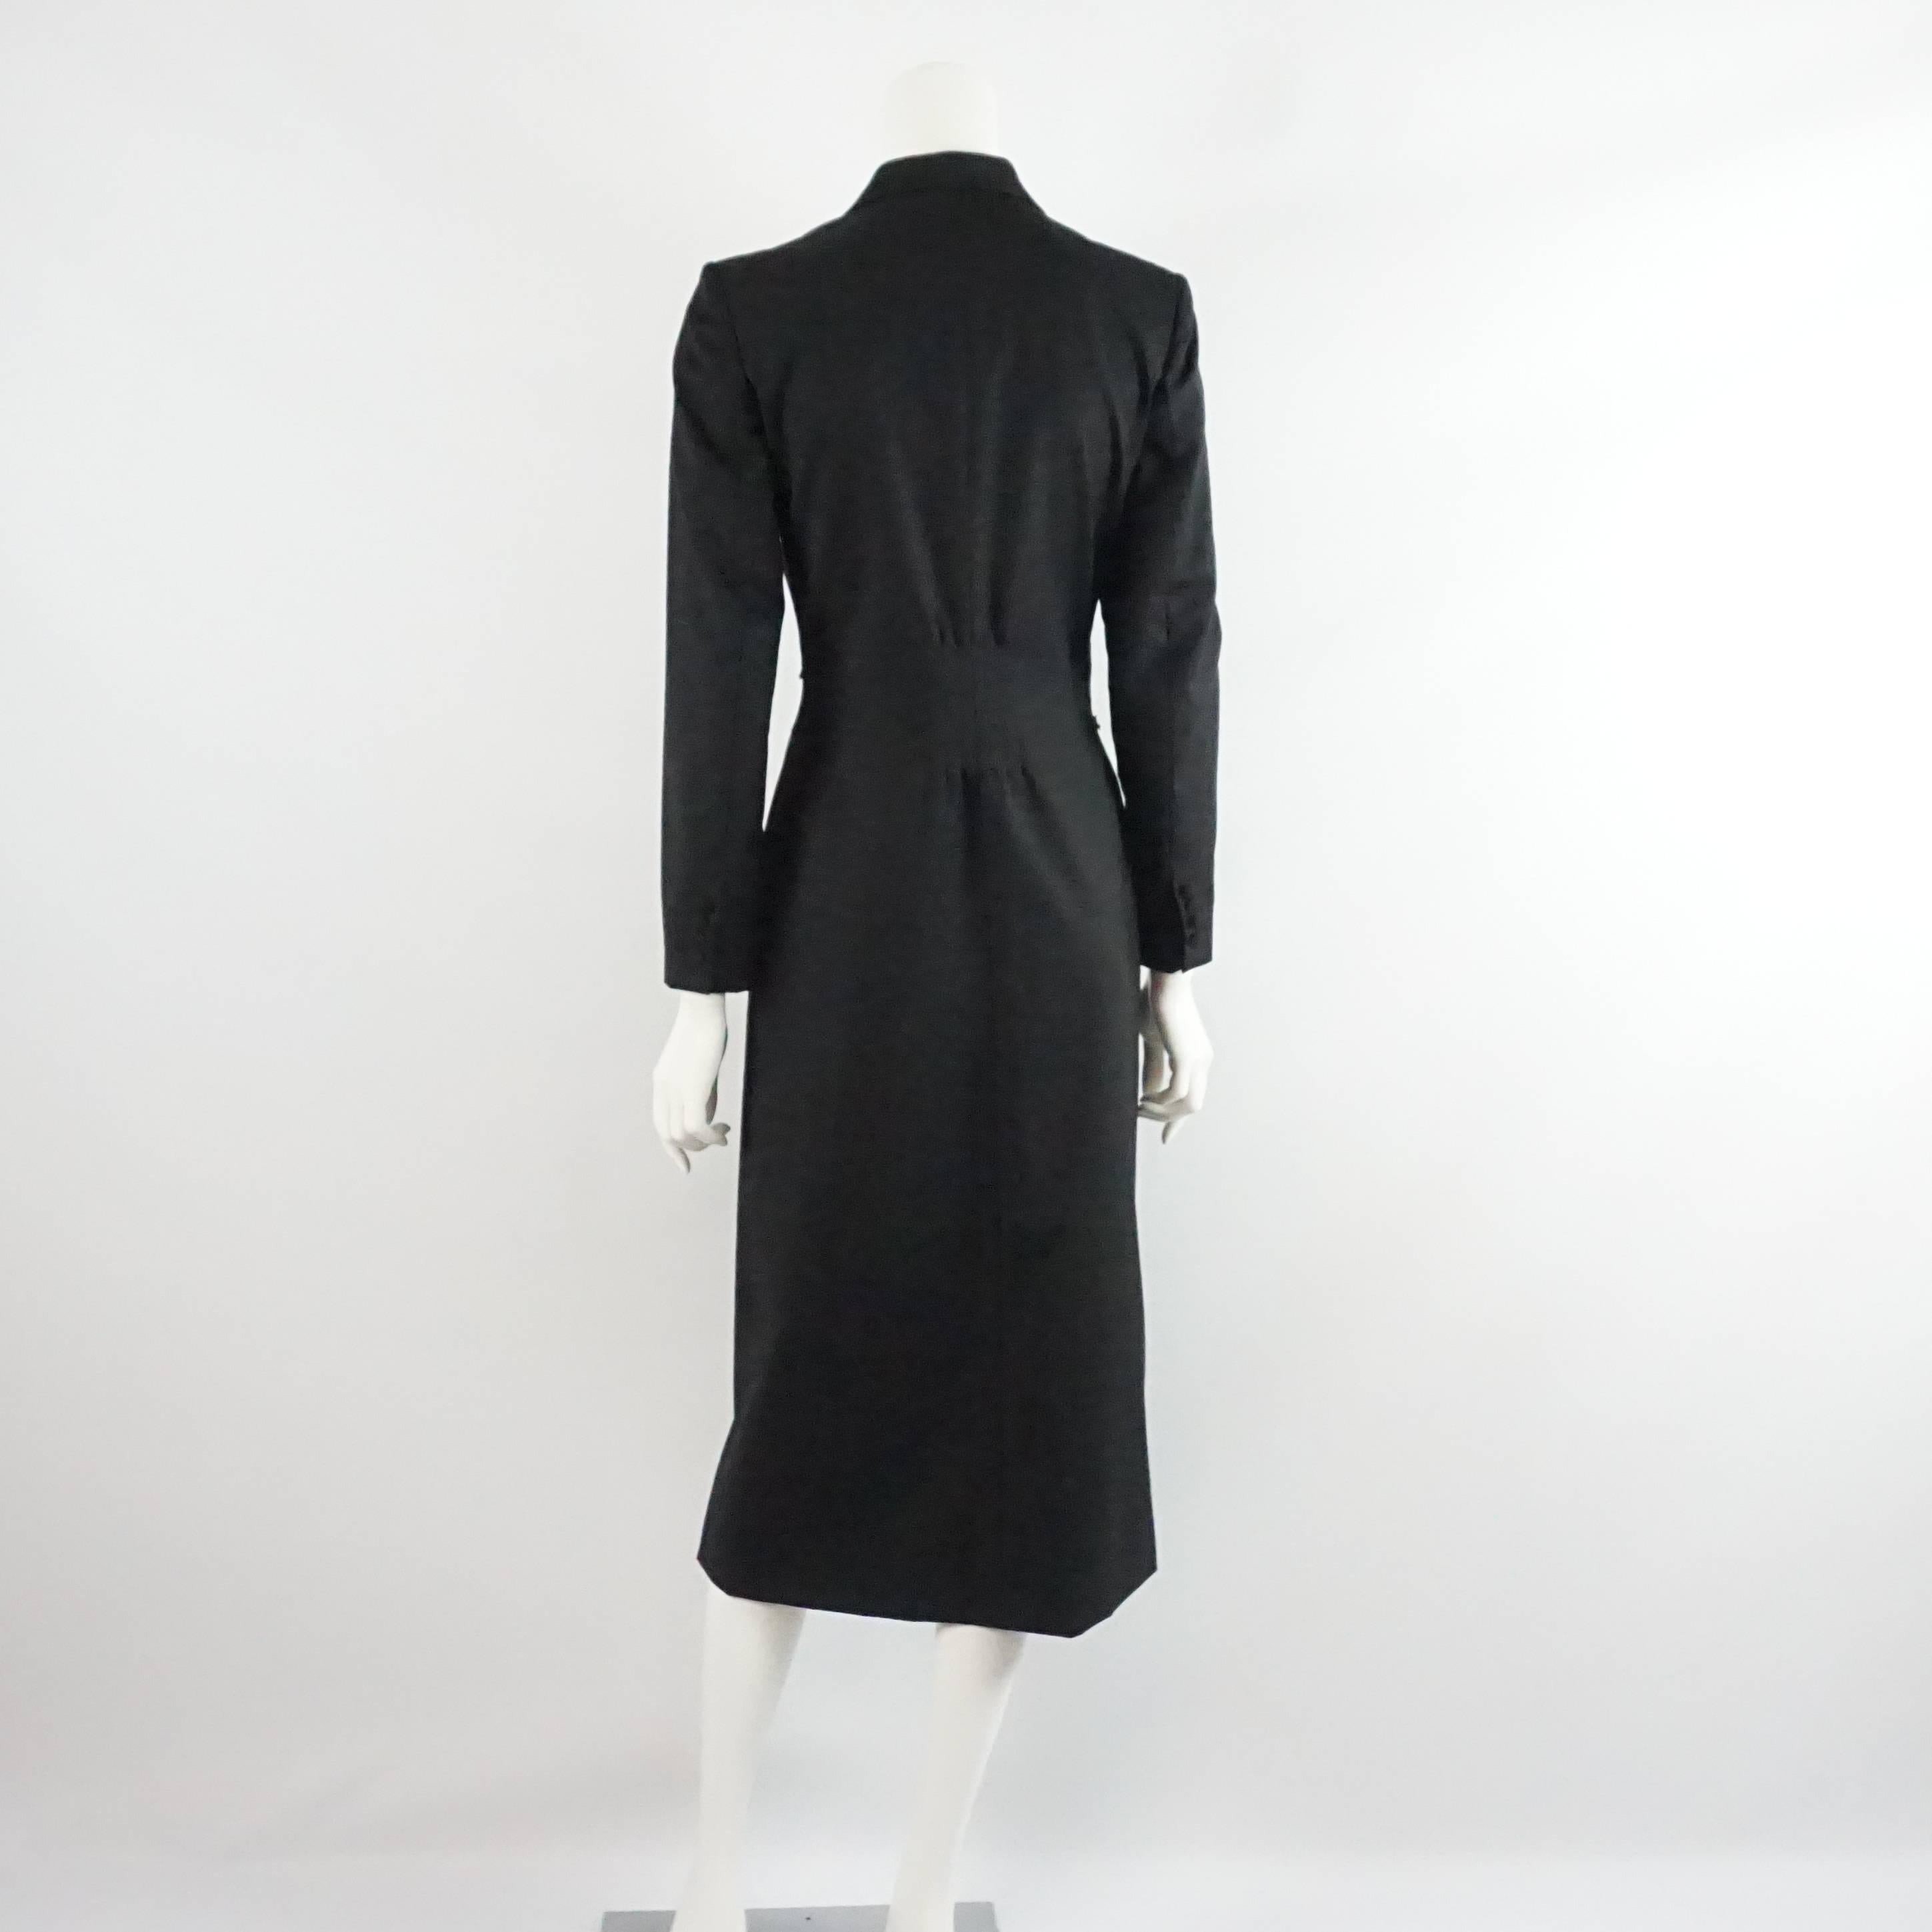 Women's Chloe Black Wool Tuxedo Style Coat with Satin Collar - 38 For Sale